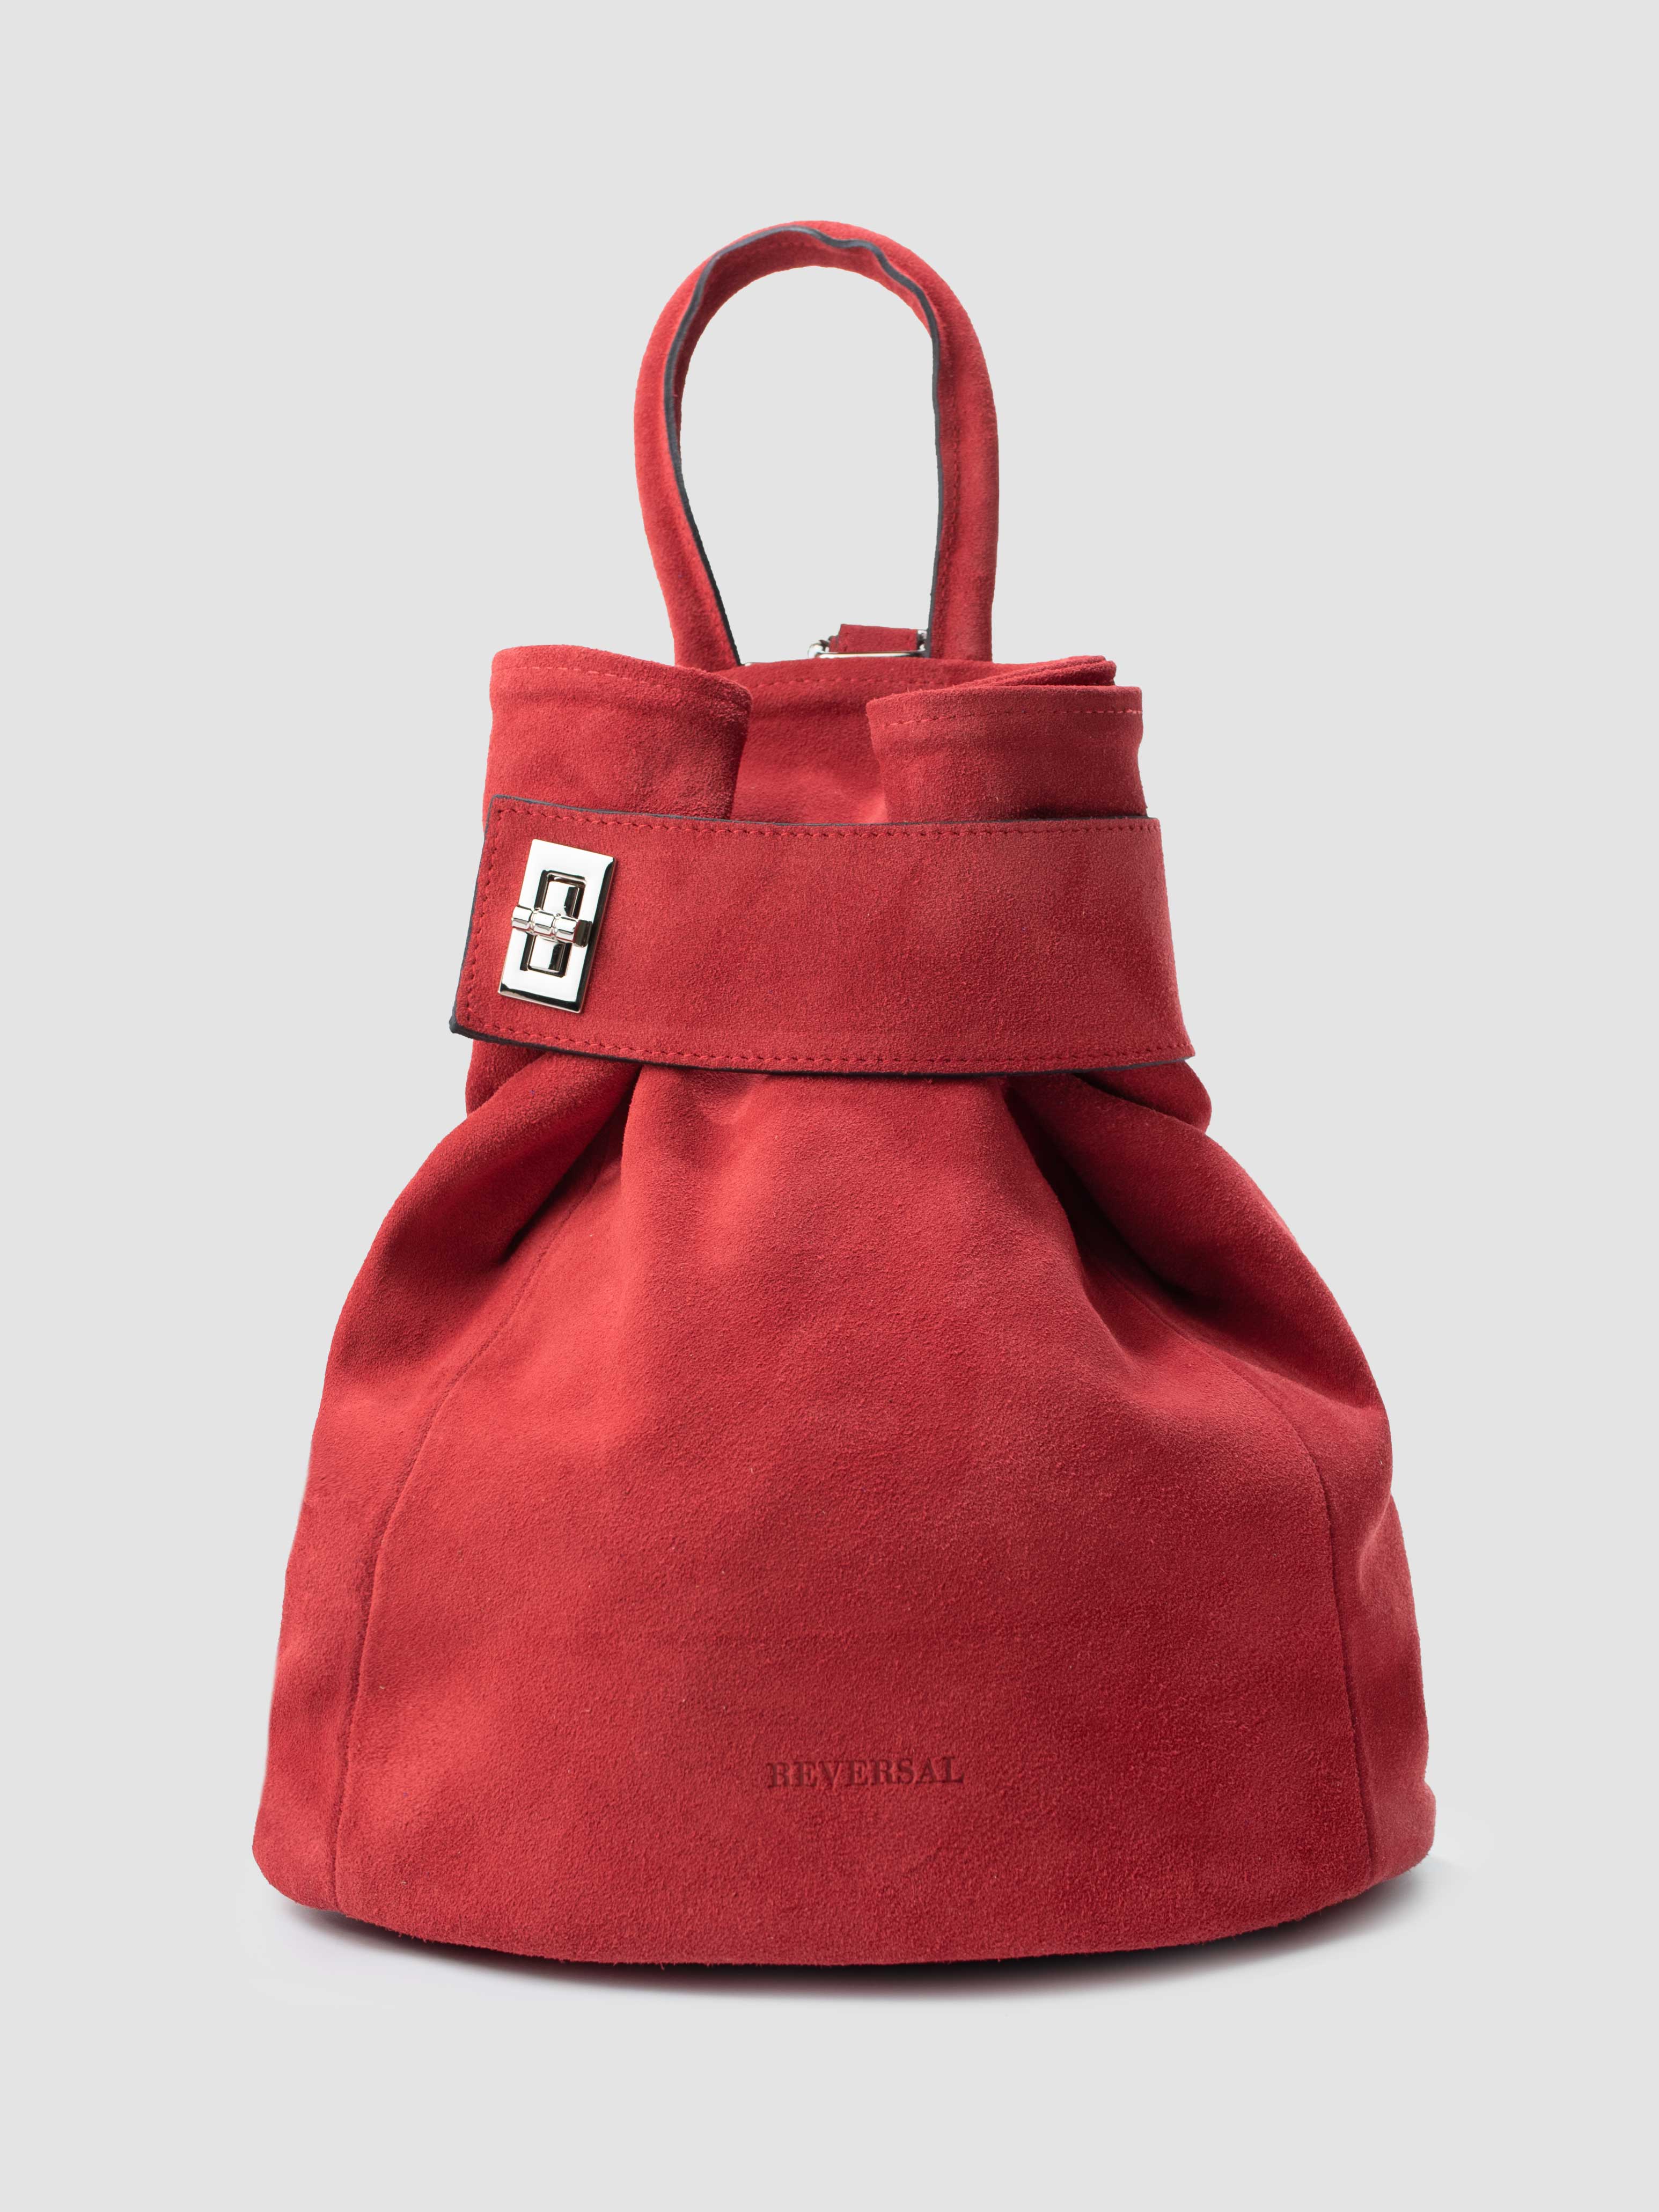 Рюкзак женский Reversal 9823R красный, 34х14х34 см